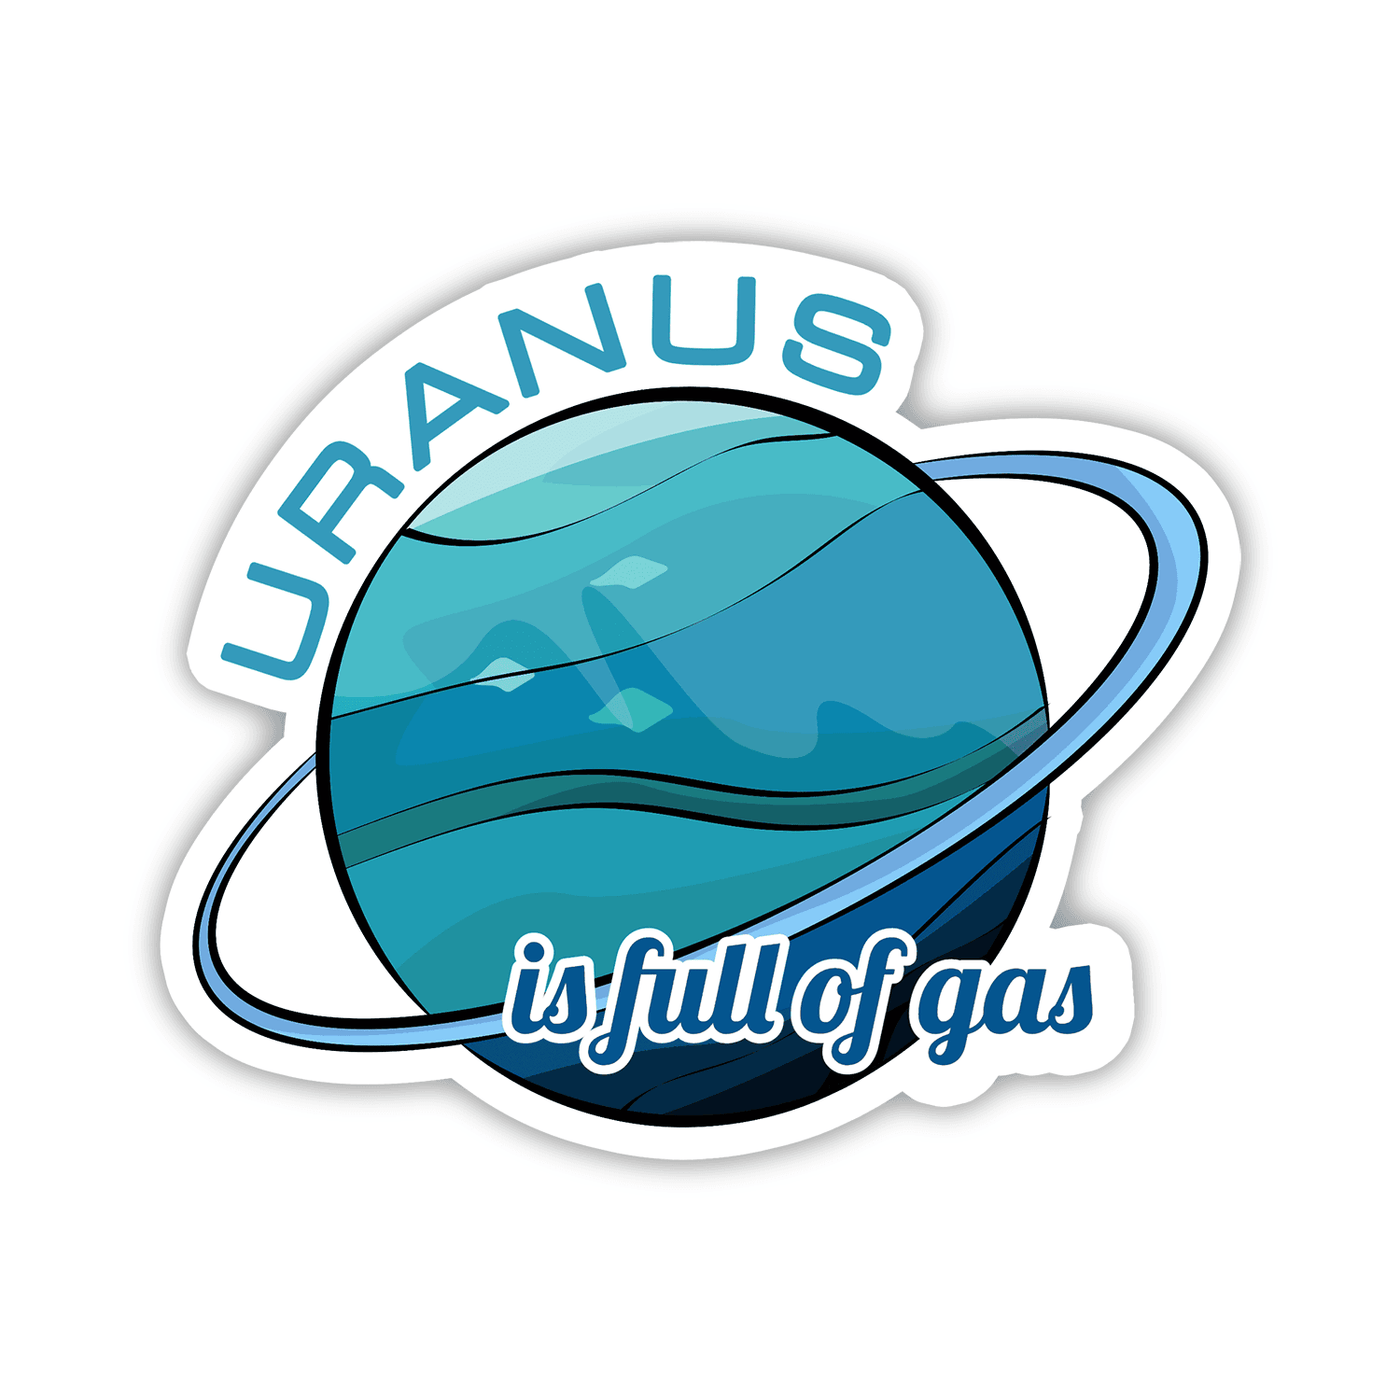 Uranus is Full of Gas - Vinyl Sticker